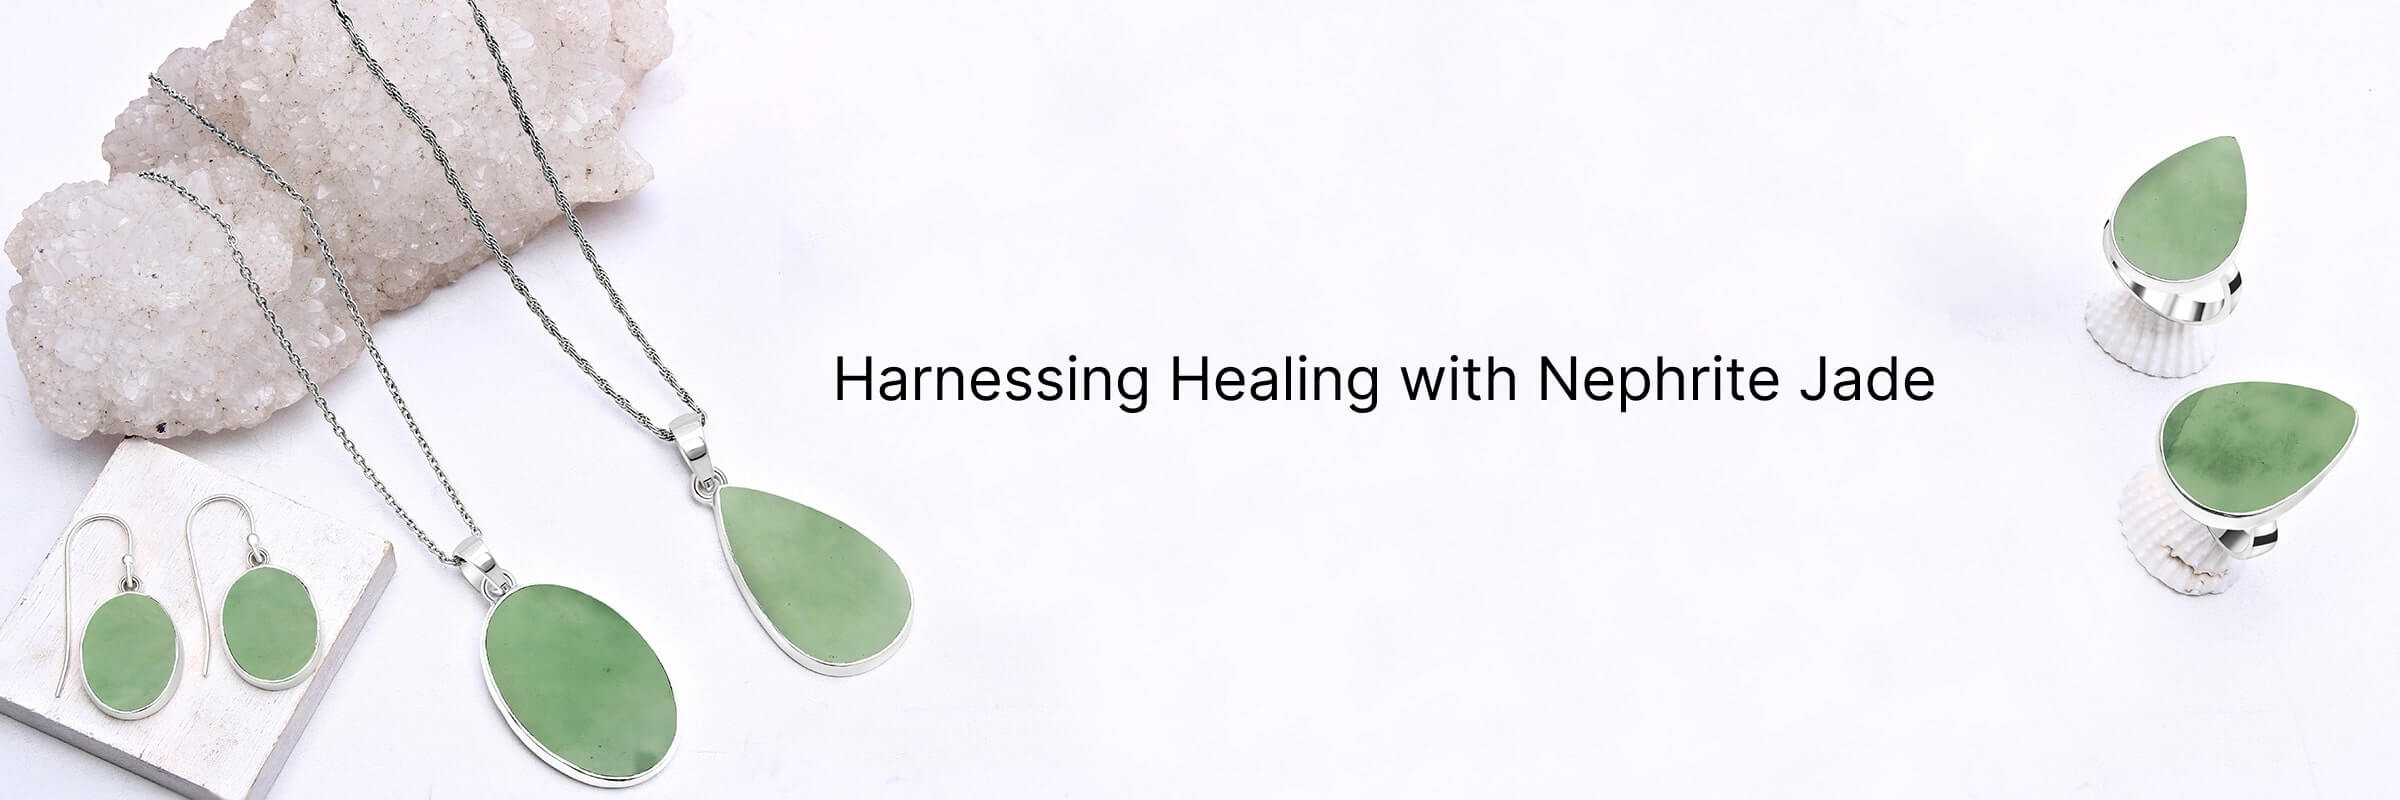 Nephrite Jade Healing properties